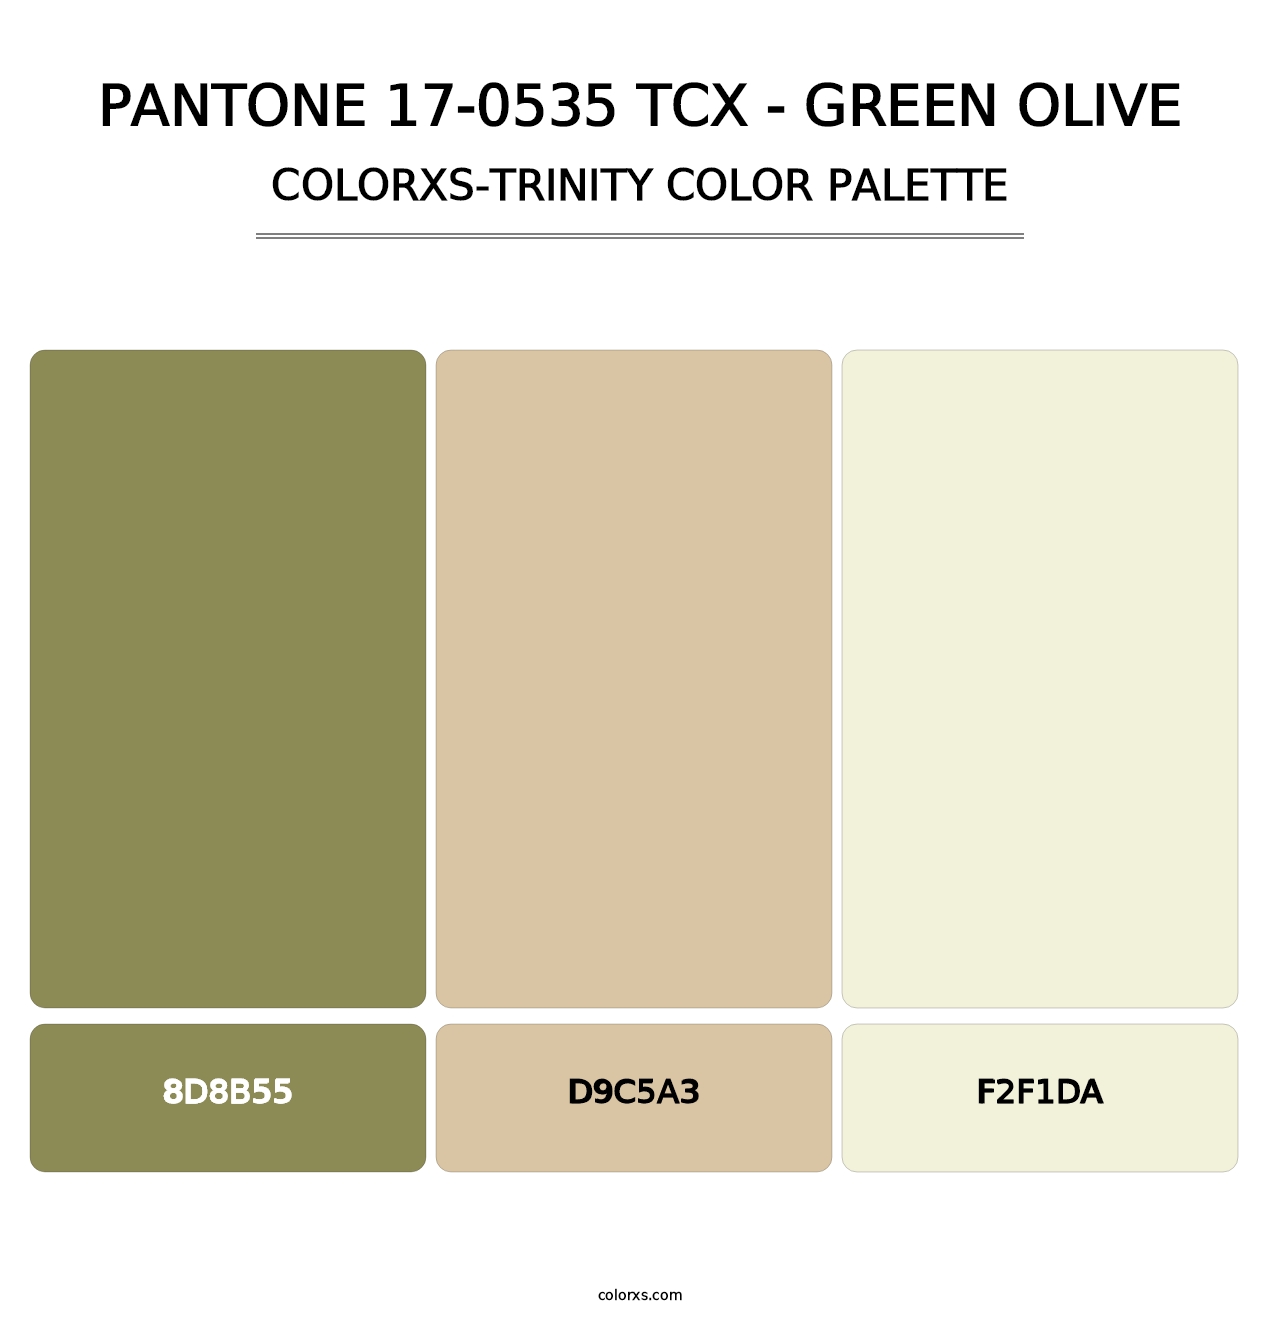 PANTONE 17-0535 TCX - Green Olive - Colorxs Trinity Palette